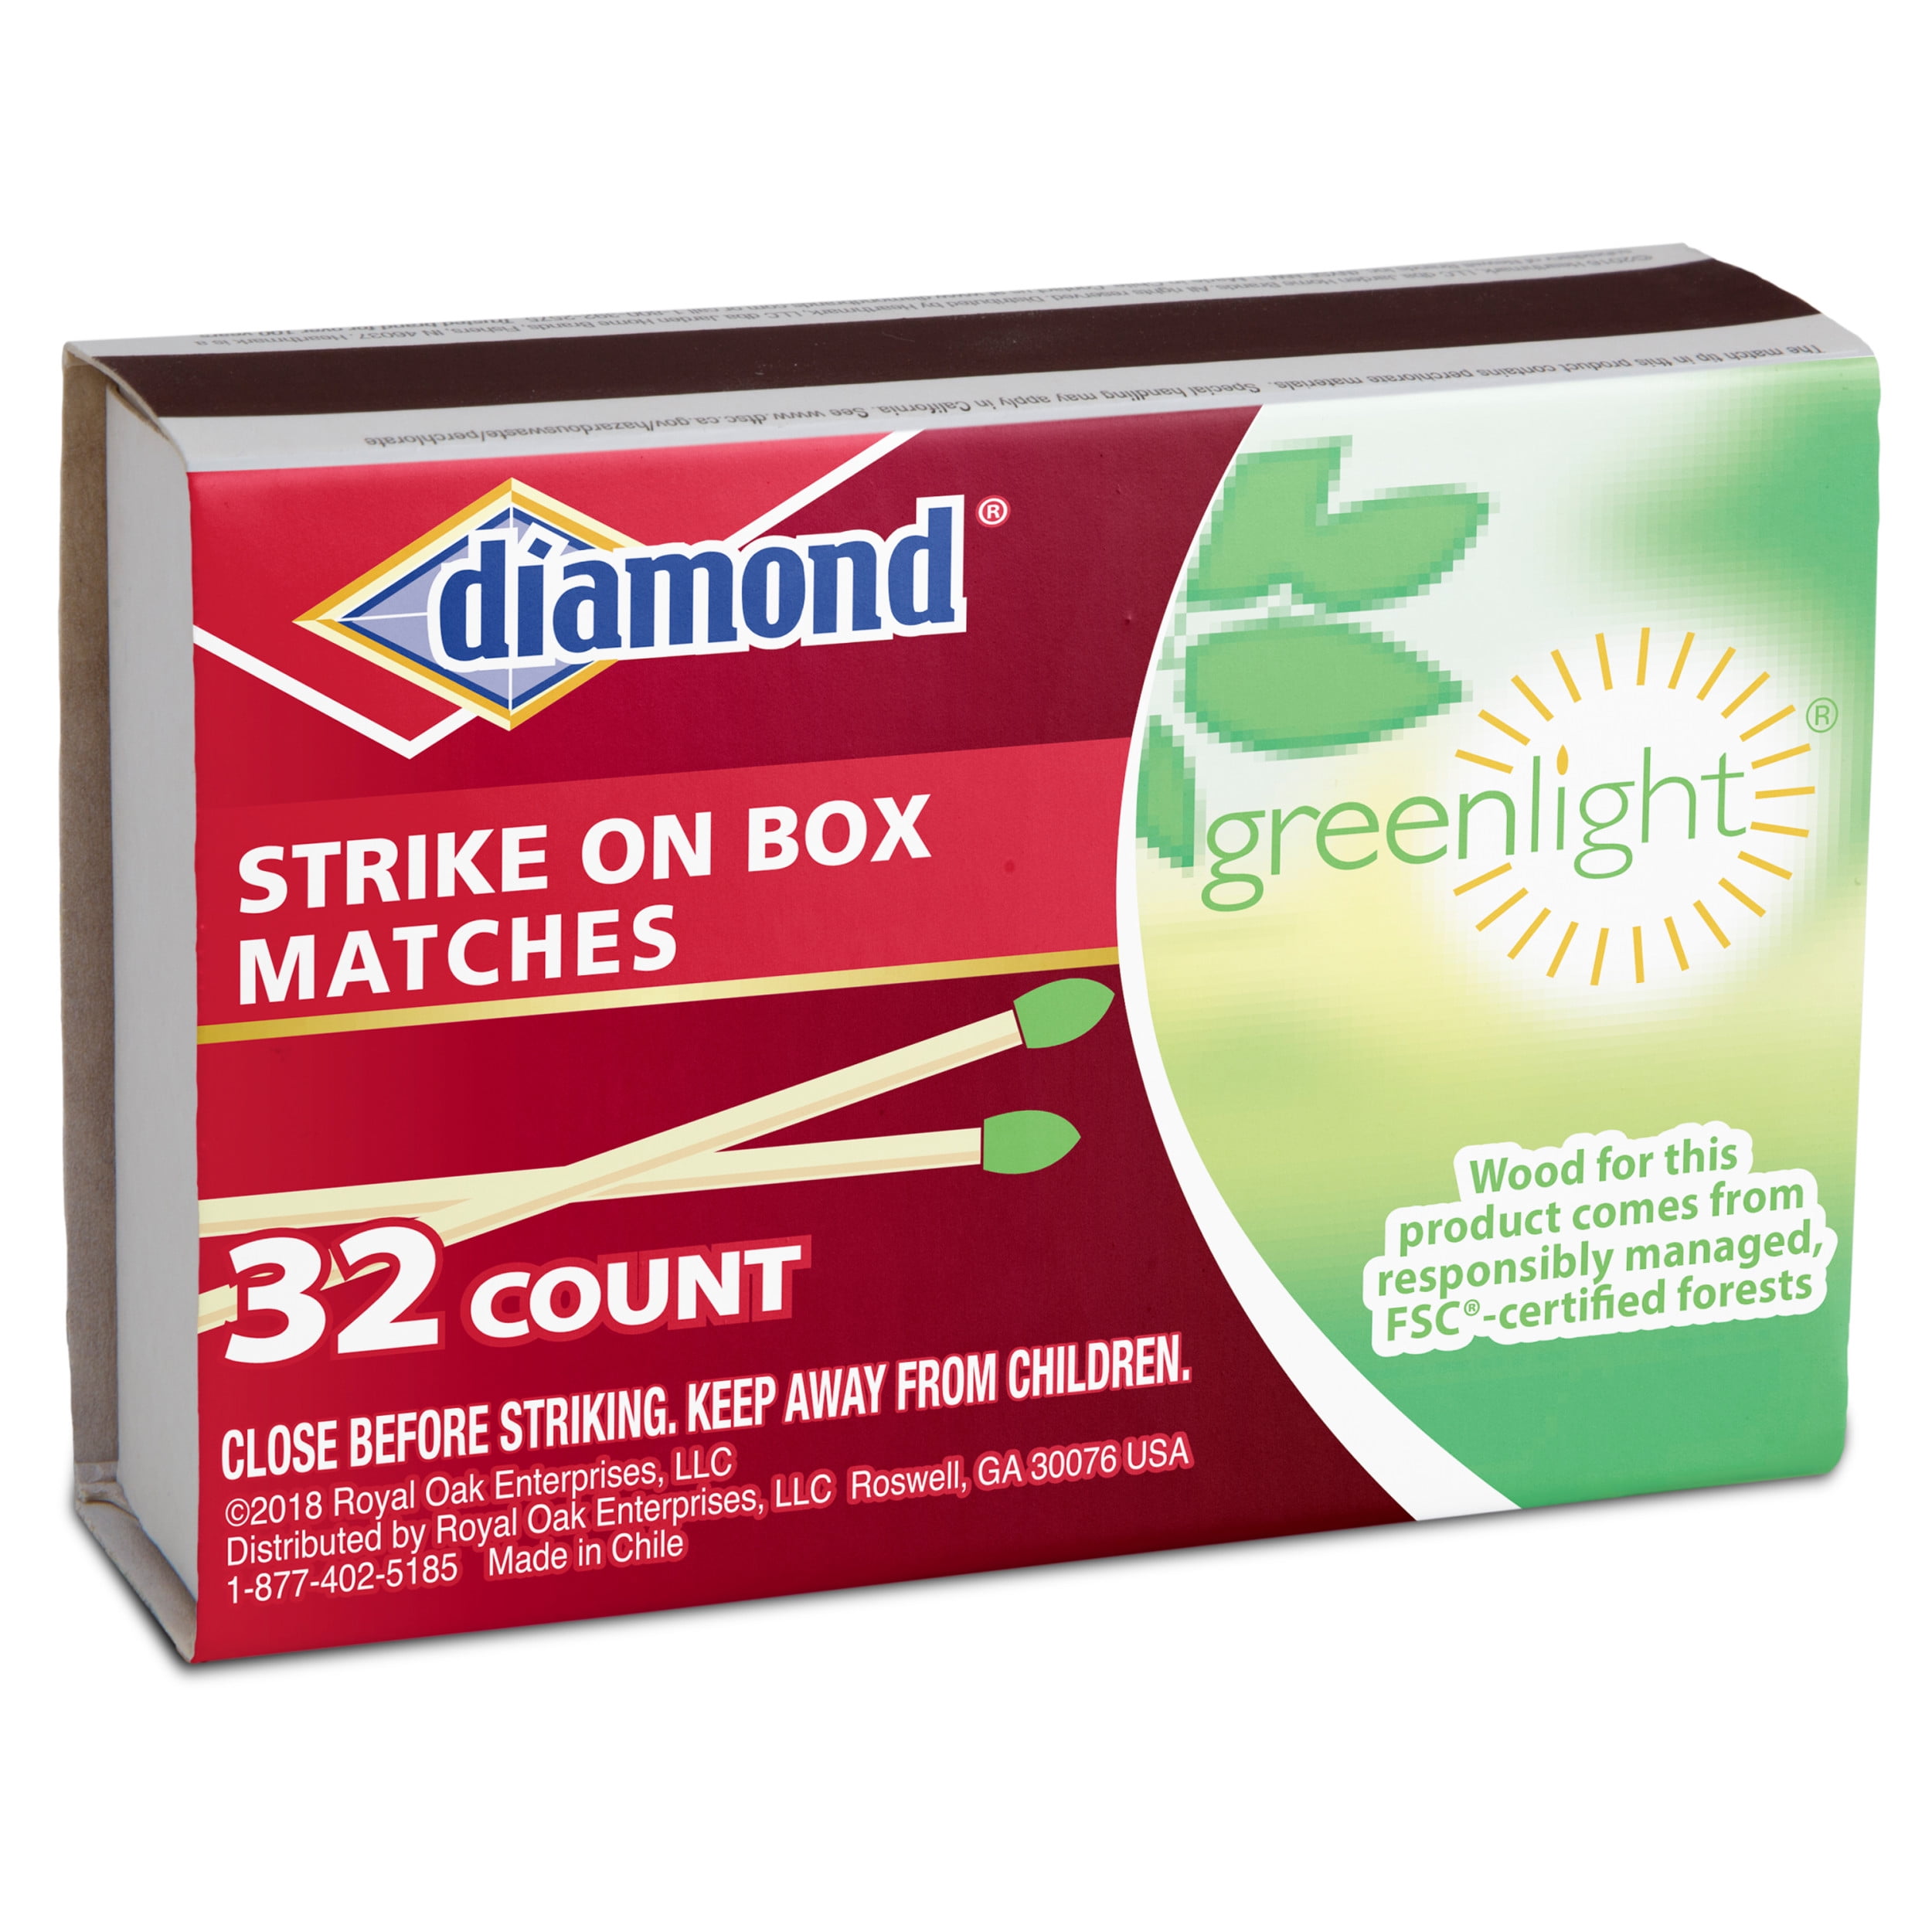 2 Boxes Diamond Strike On Box Kitchen Matches Greenlight 300 Count Ea= 600 Total 